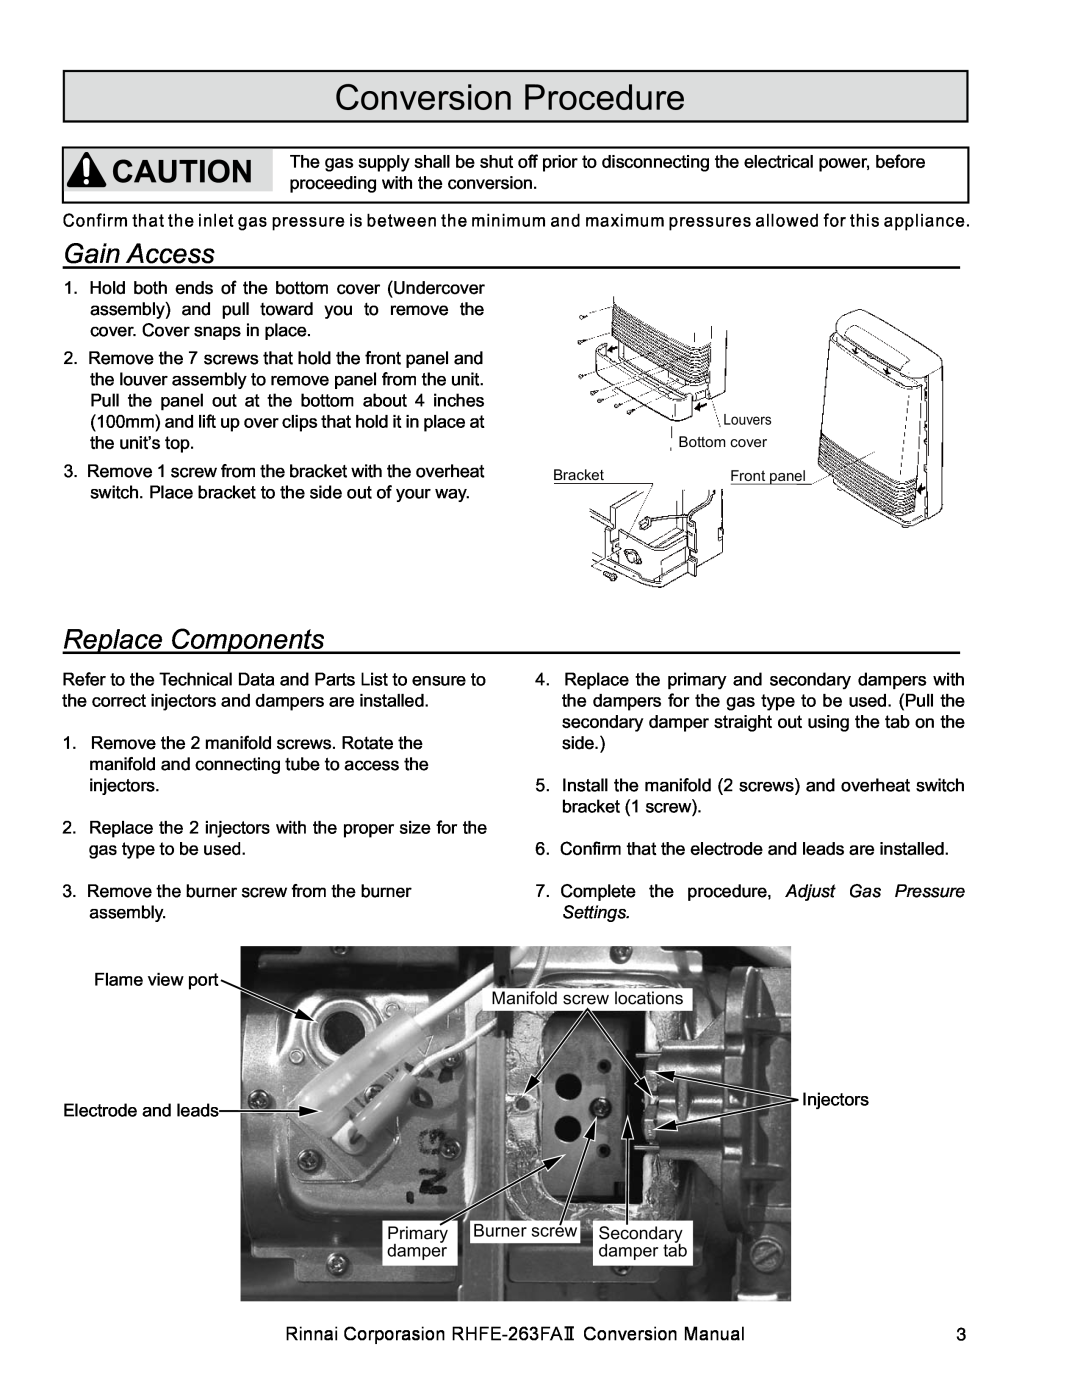 Rinnai RHFE-263FA II manual Conversion Procedure, Gain Access, Replace Components, Settings 